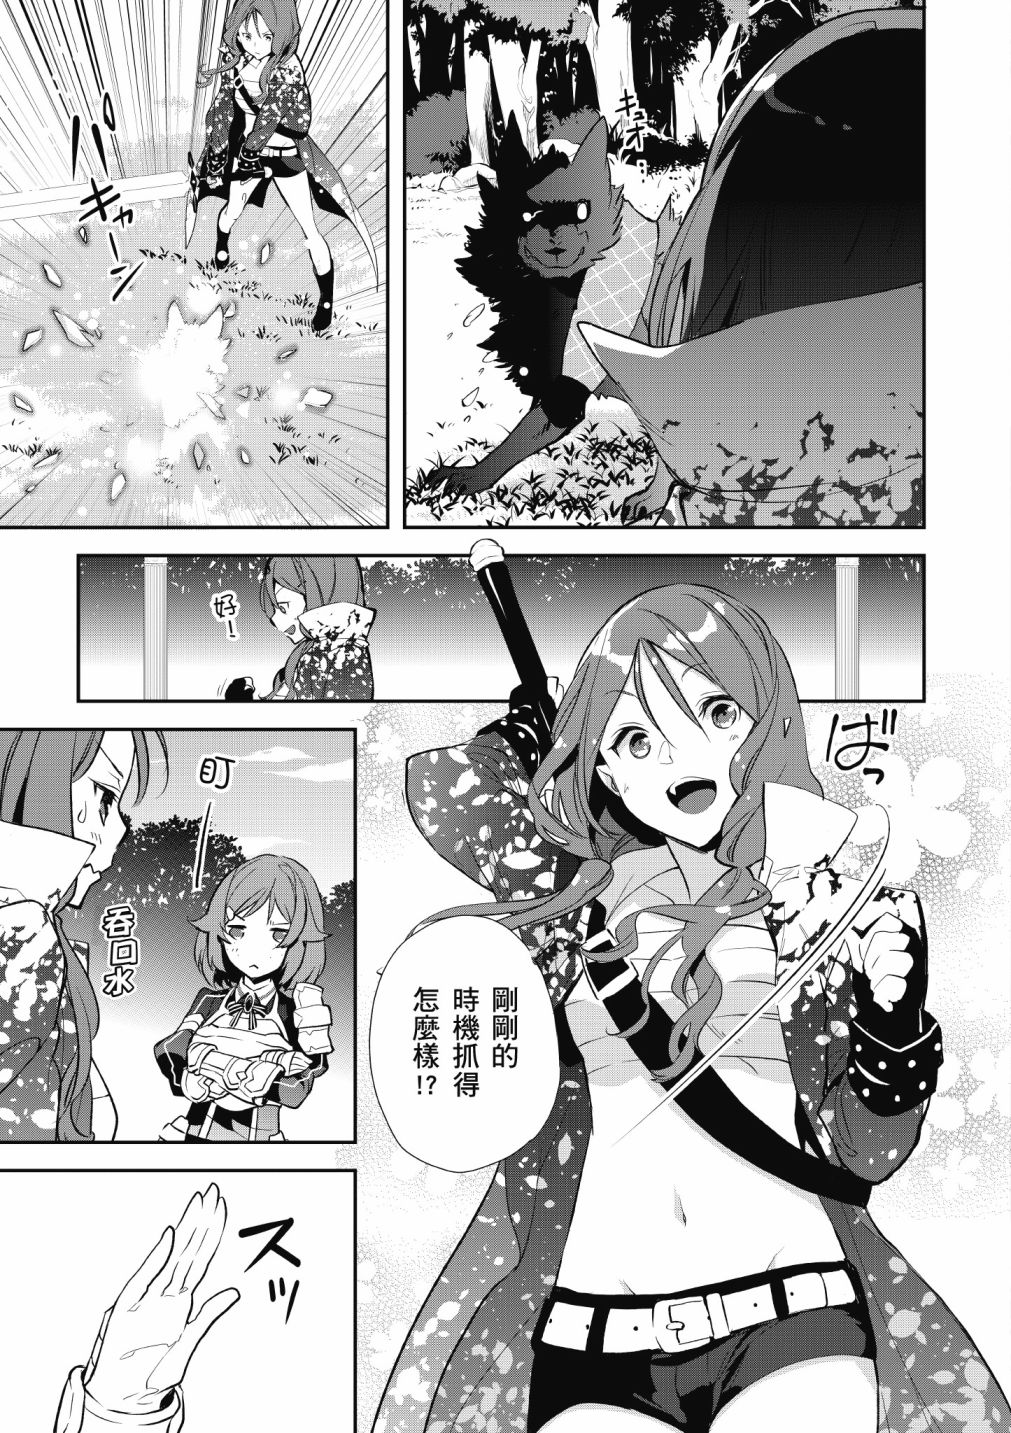 Sword Art Online少女們的樂章 - 第05卷(1/4) - 7